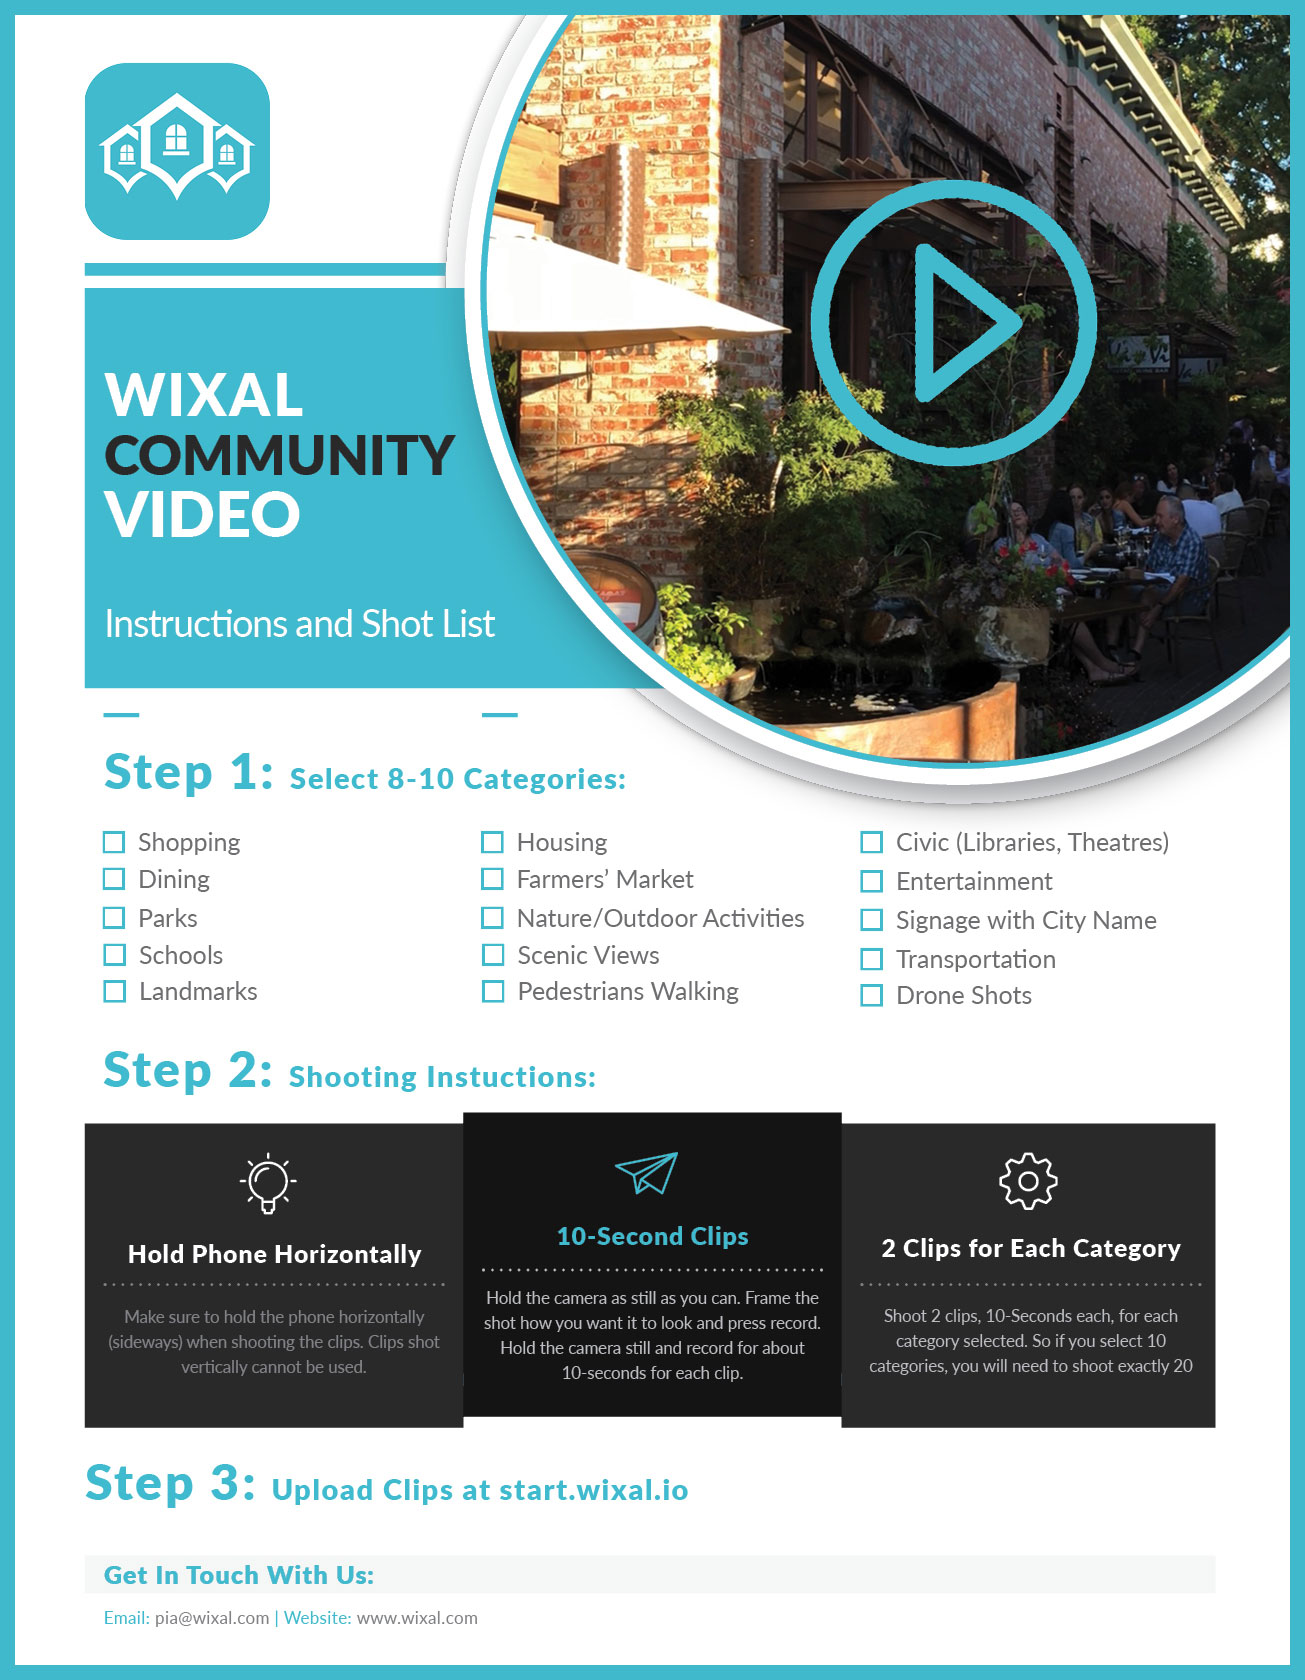 Wixal Community Video Handout